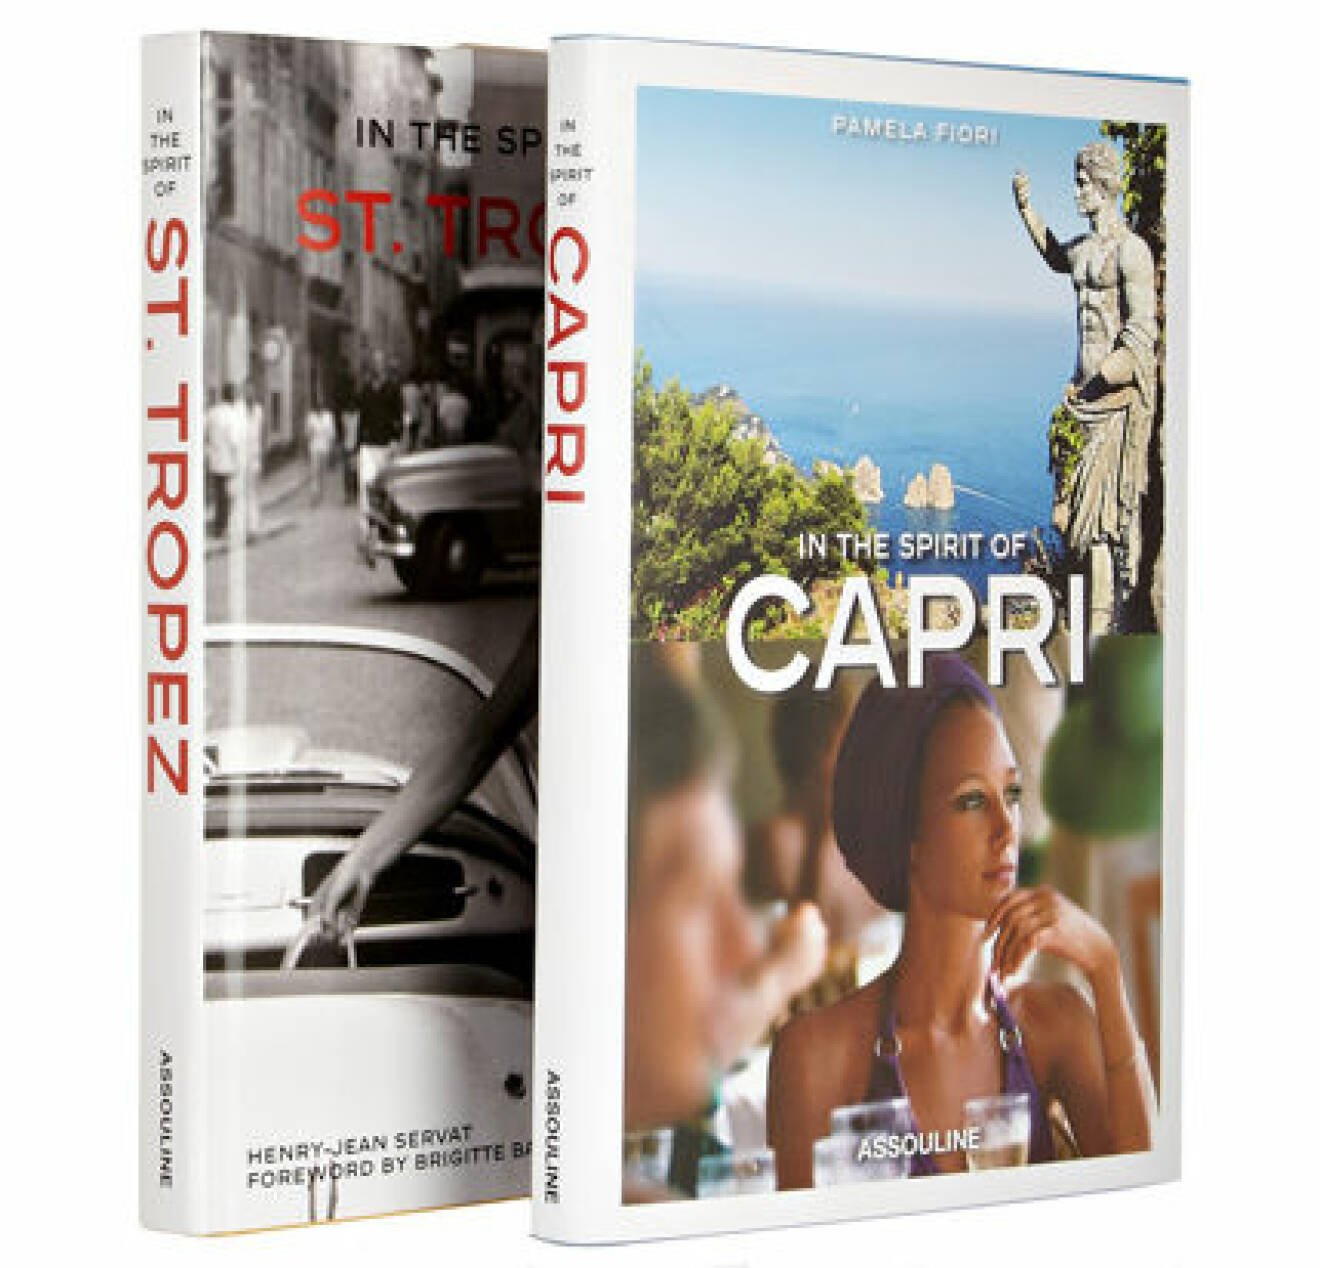 3. Böcker, the spirit of Saint Tropez & Capri, 758 kr, Henry-Jean Servat & Pamela Fiori, Assouline Net-a-porter.com